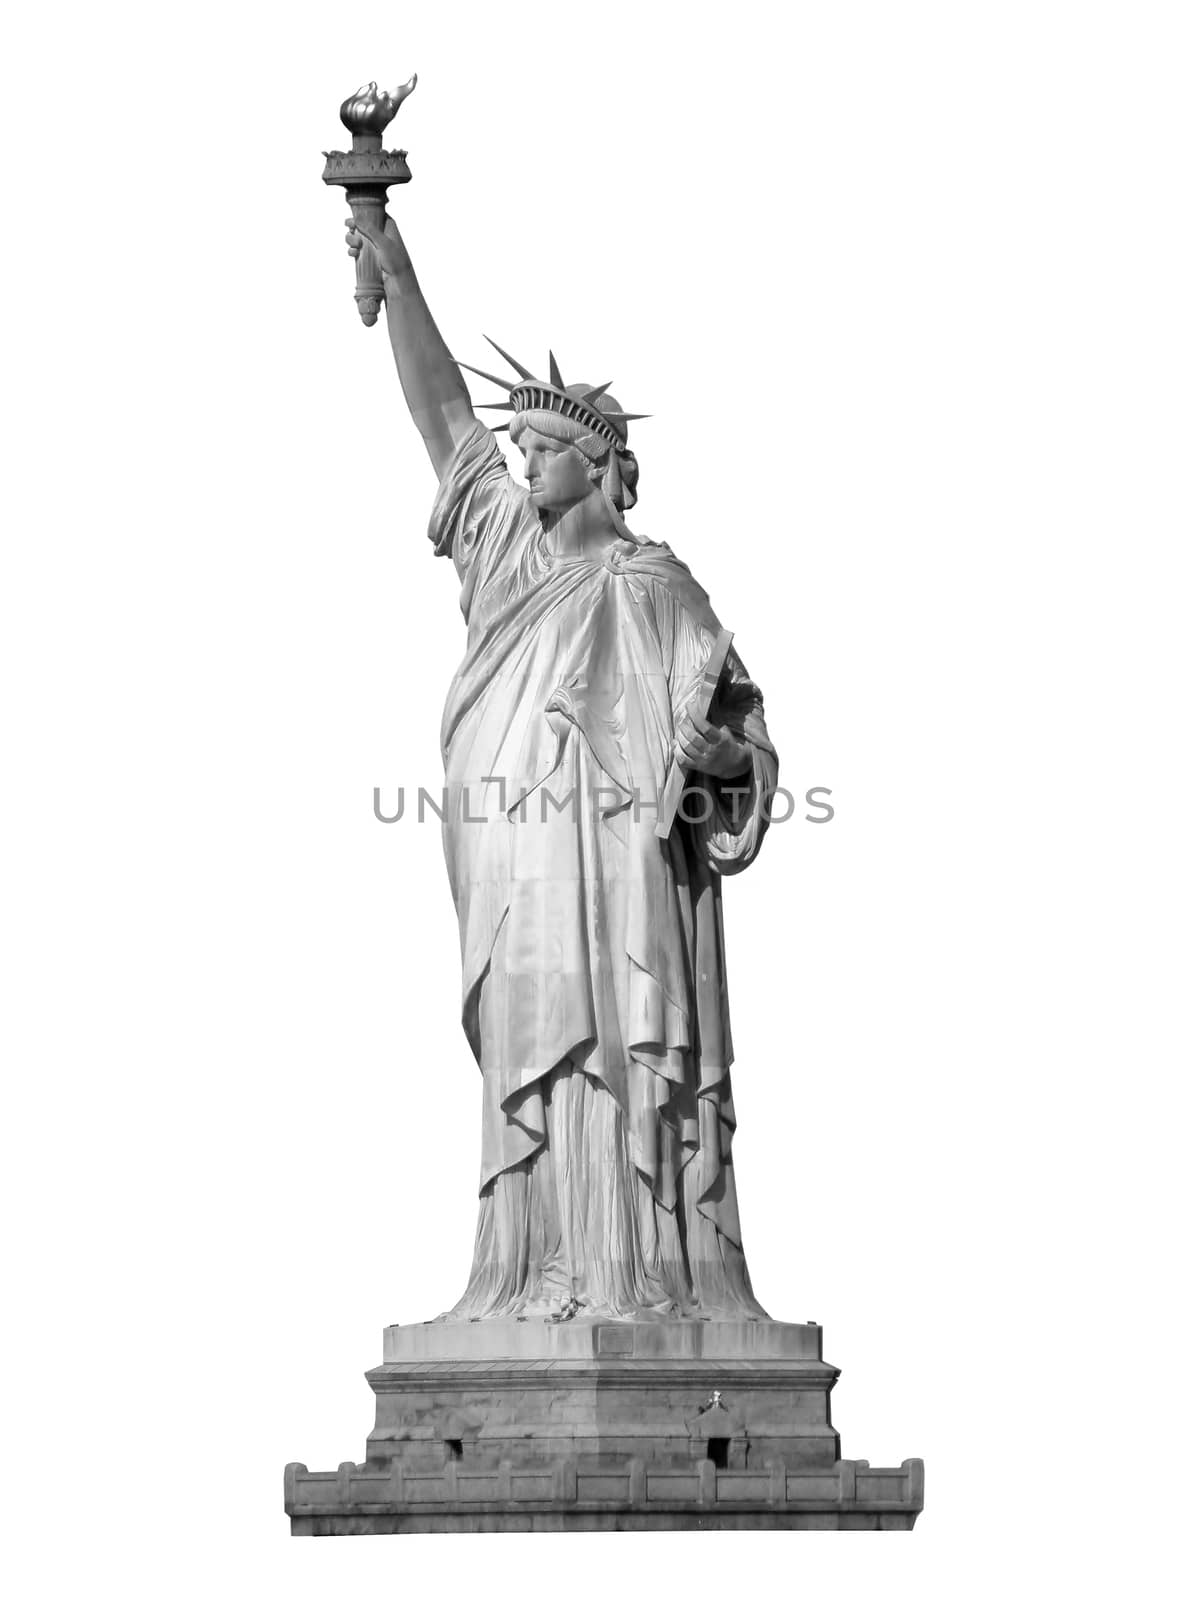 Statue of liberty by alentejano